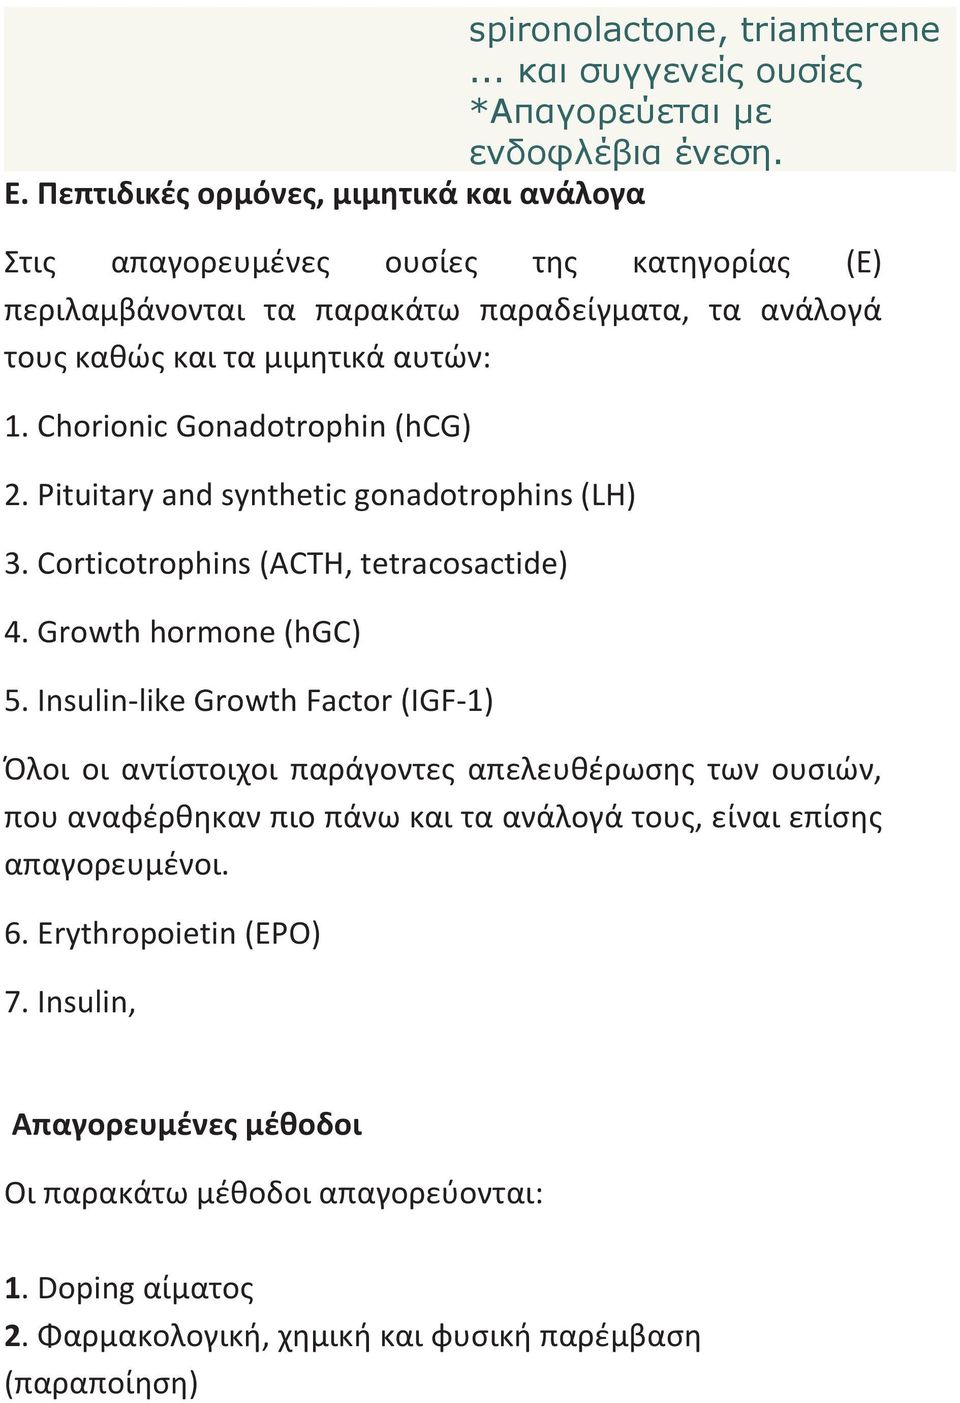 Chorionic Gonadotrophin (hcg) 2. Pituitary and synthetic gonadotrophins (LH) 3. Corticotrophins (ACTH, tetracosactide) 4. Growth hormone (hgc) 5.